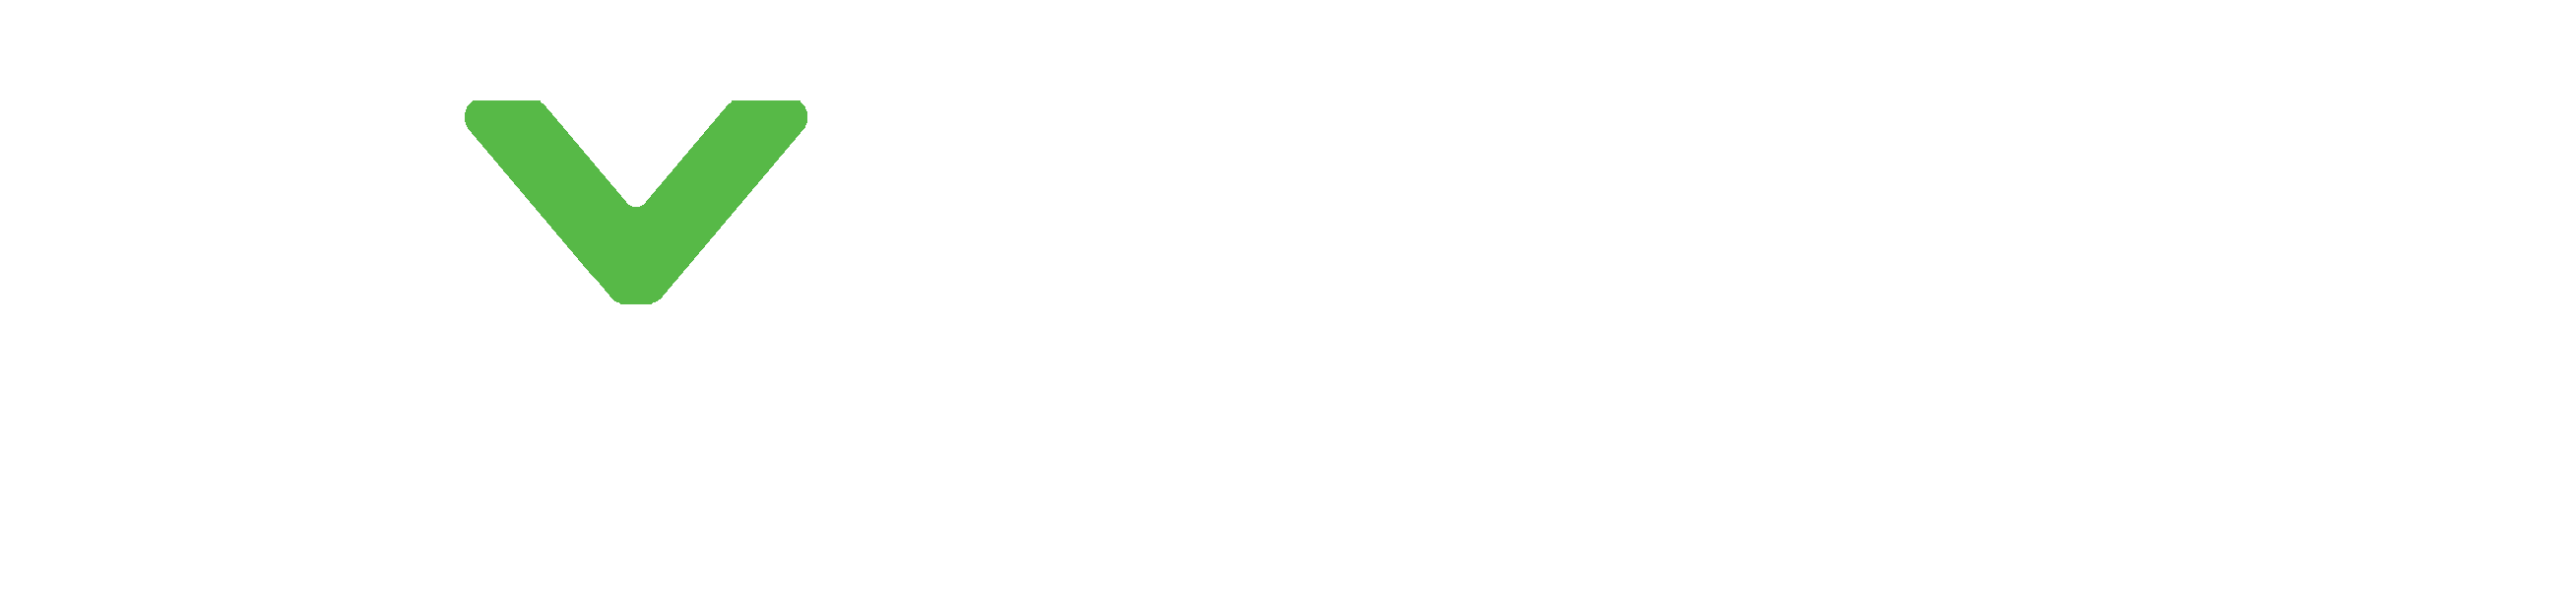 Vaporizer Wizard Menu Banner Logo